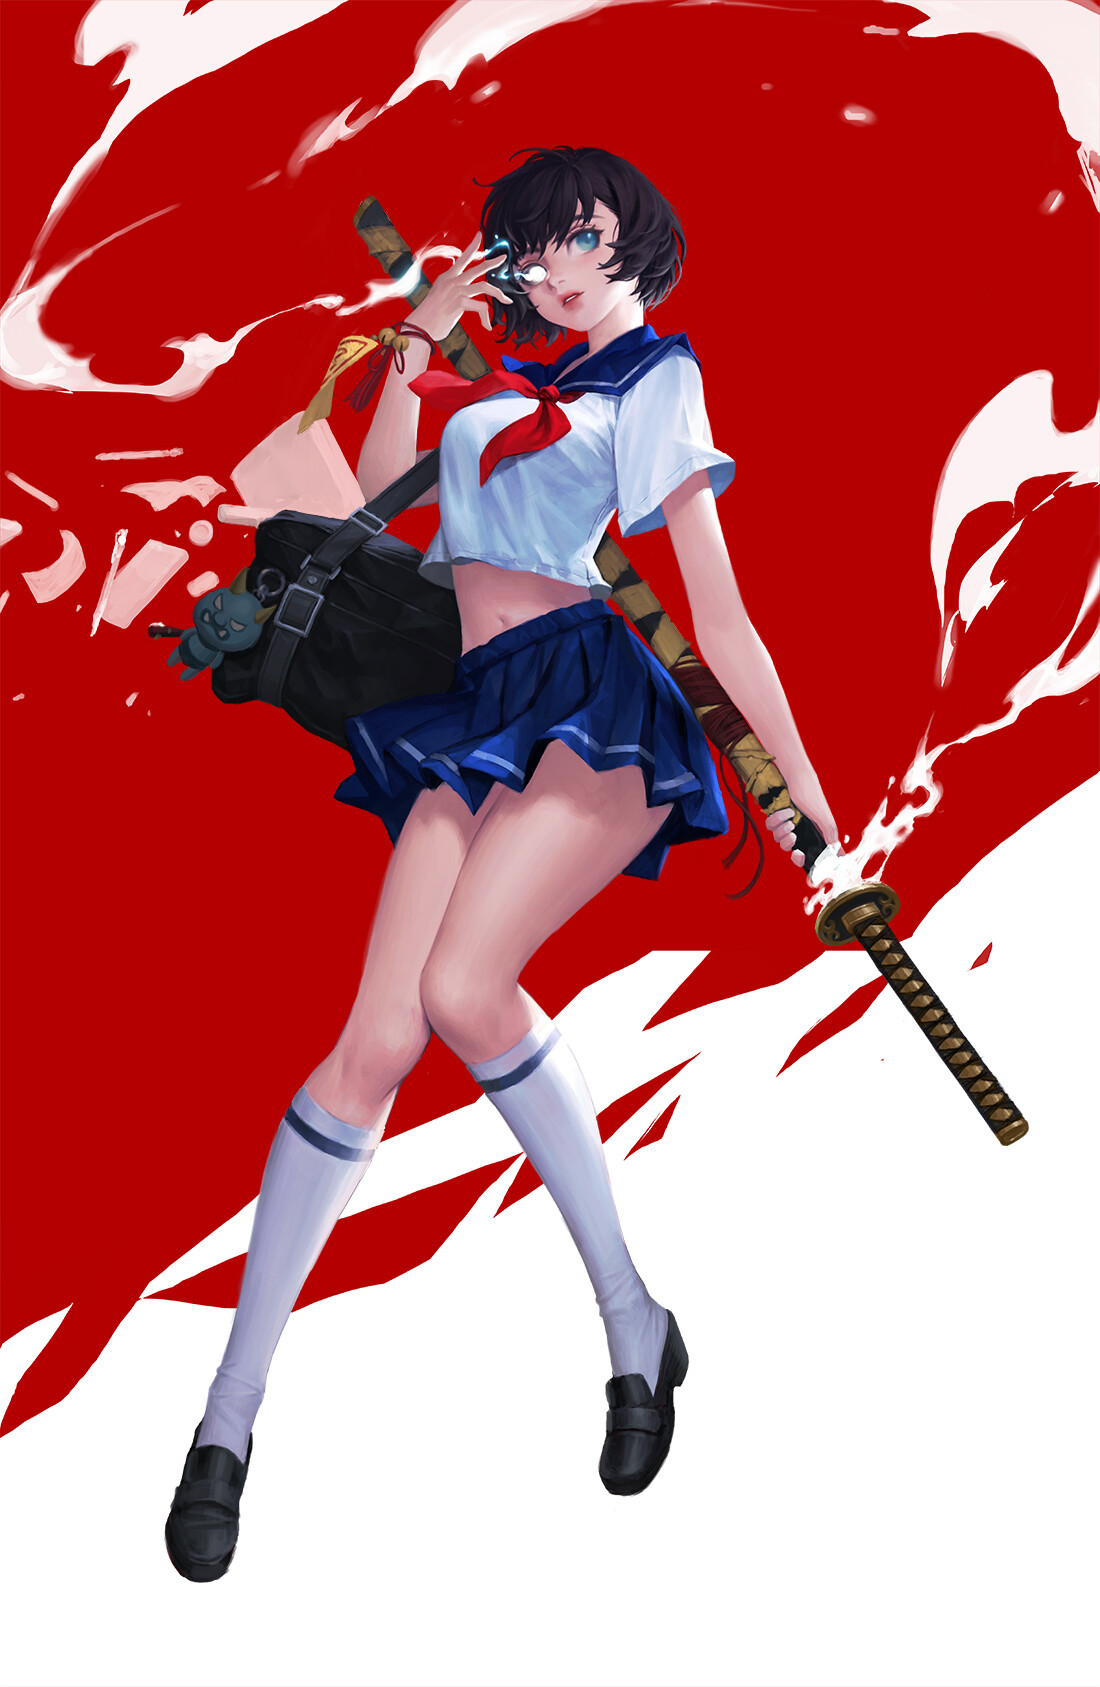 Anime 1100x1687 anime anime girls knees together legs socks miniskirt sword weapon women with swords dark hair red background short hair sailor uniform Cheolseung Ok